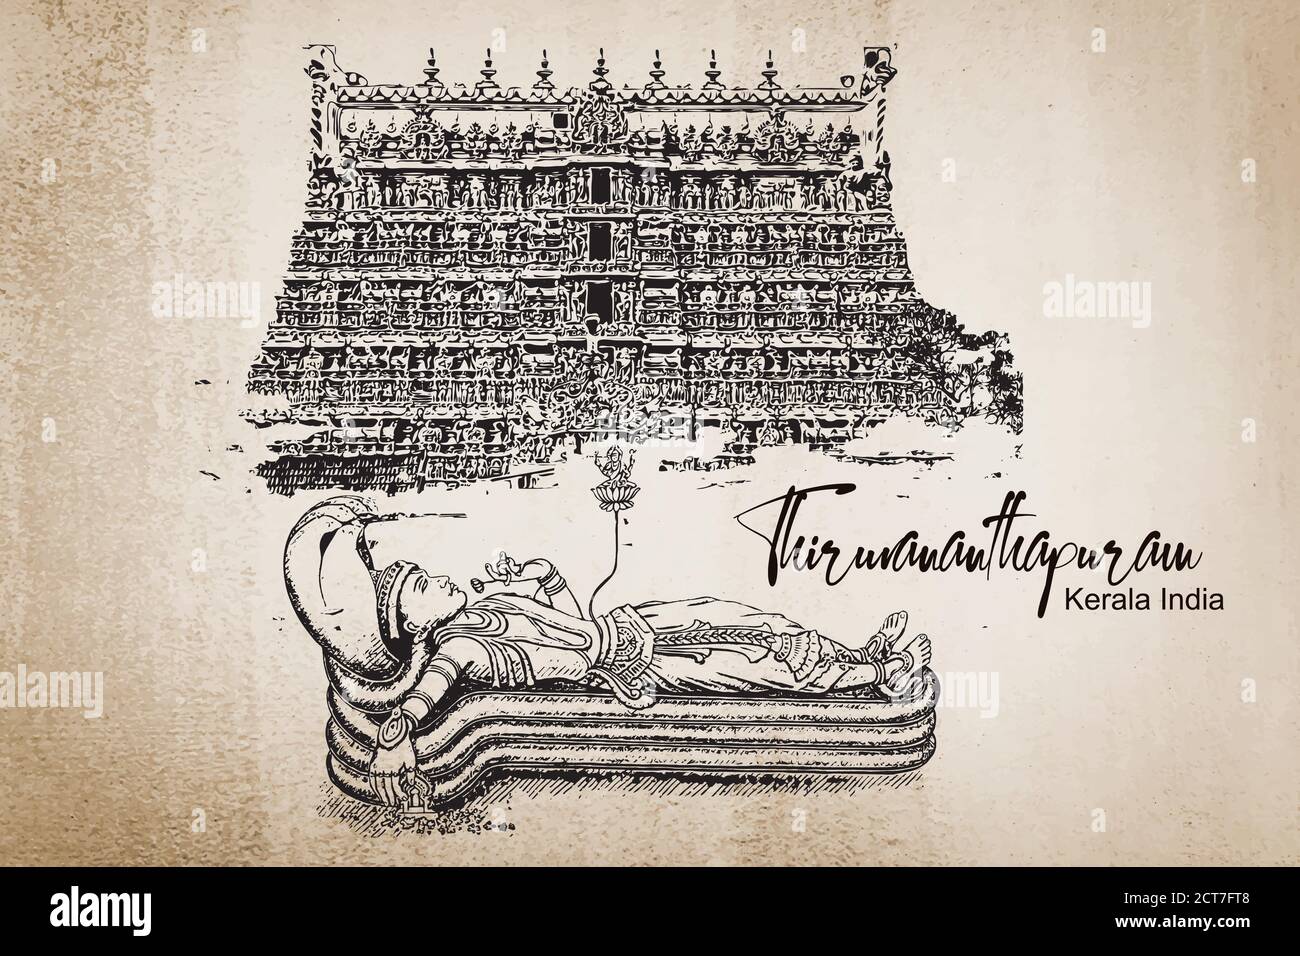 Thiruvanthapuram Shri padmanabhaswamy temple vector illustration , hand drawing  state capital of Kerala, India. vintage background. Stock Vector